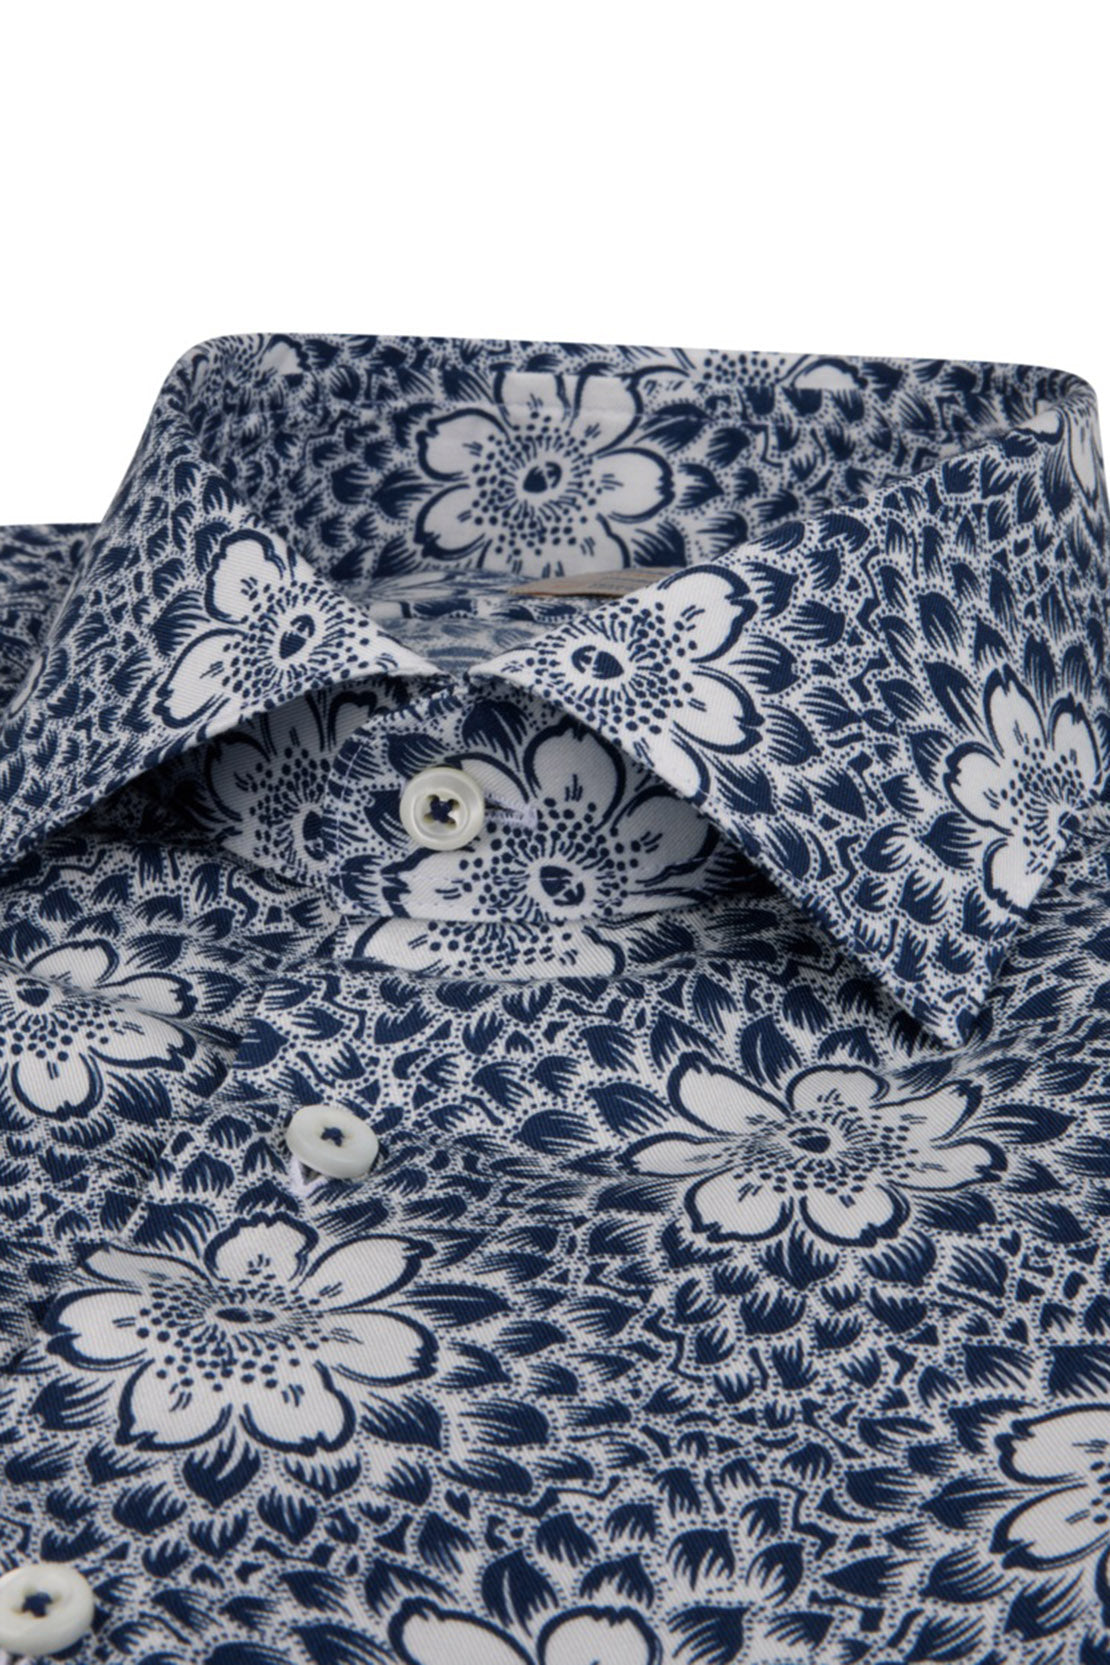 STENSTROMS - SLIMLINE Floral Shirt in Stretch Viscose Fabric 7127118163161